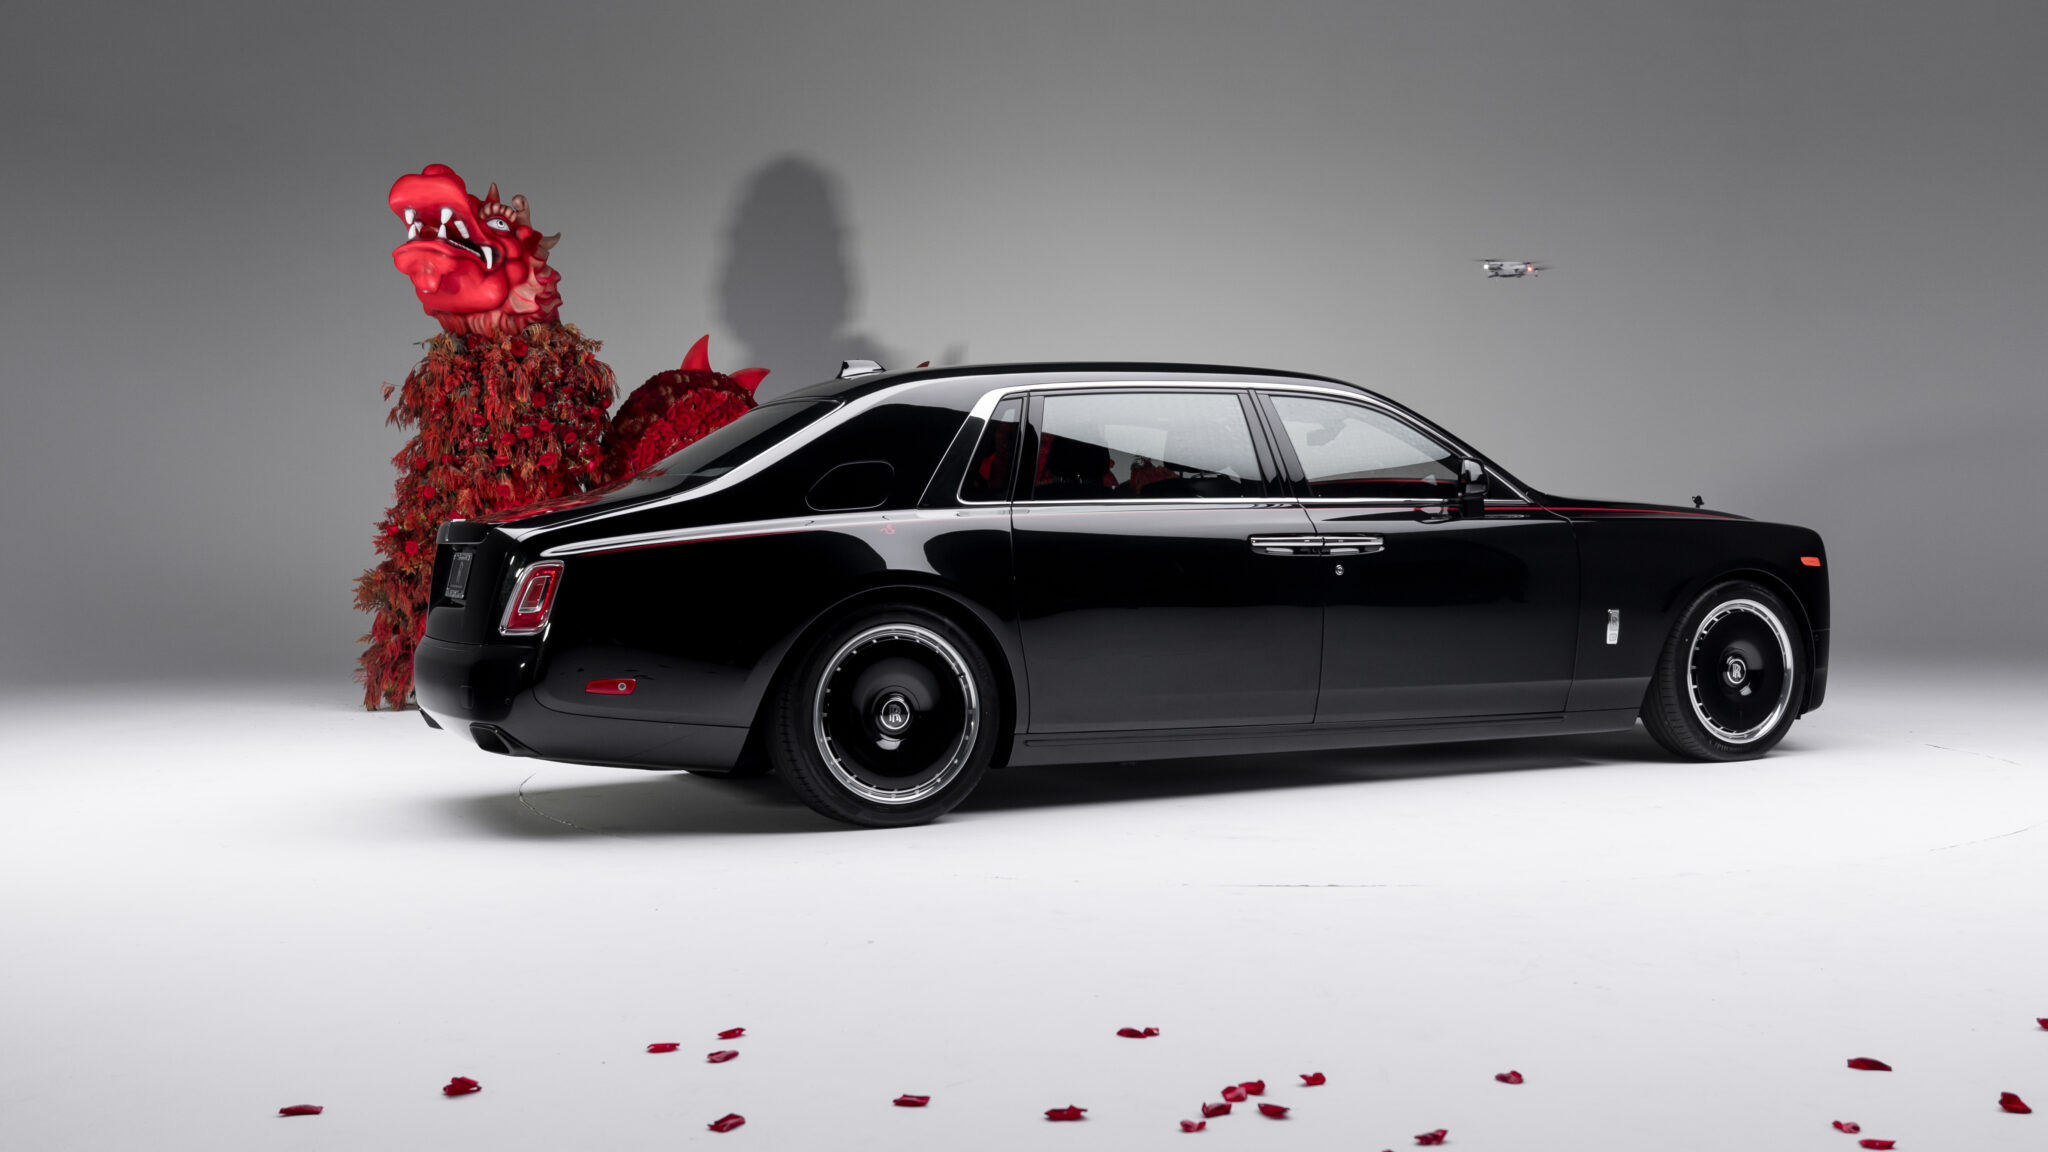 An image of a Rolls-Royce Phantom in a studio.